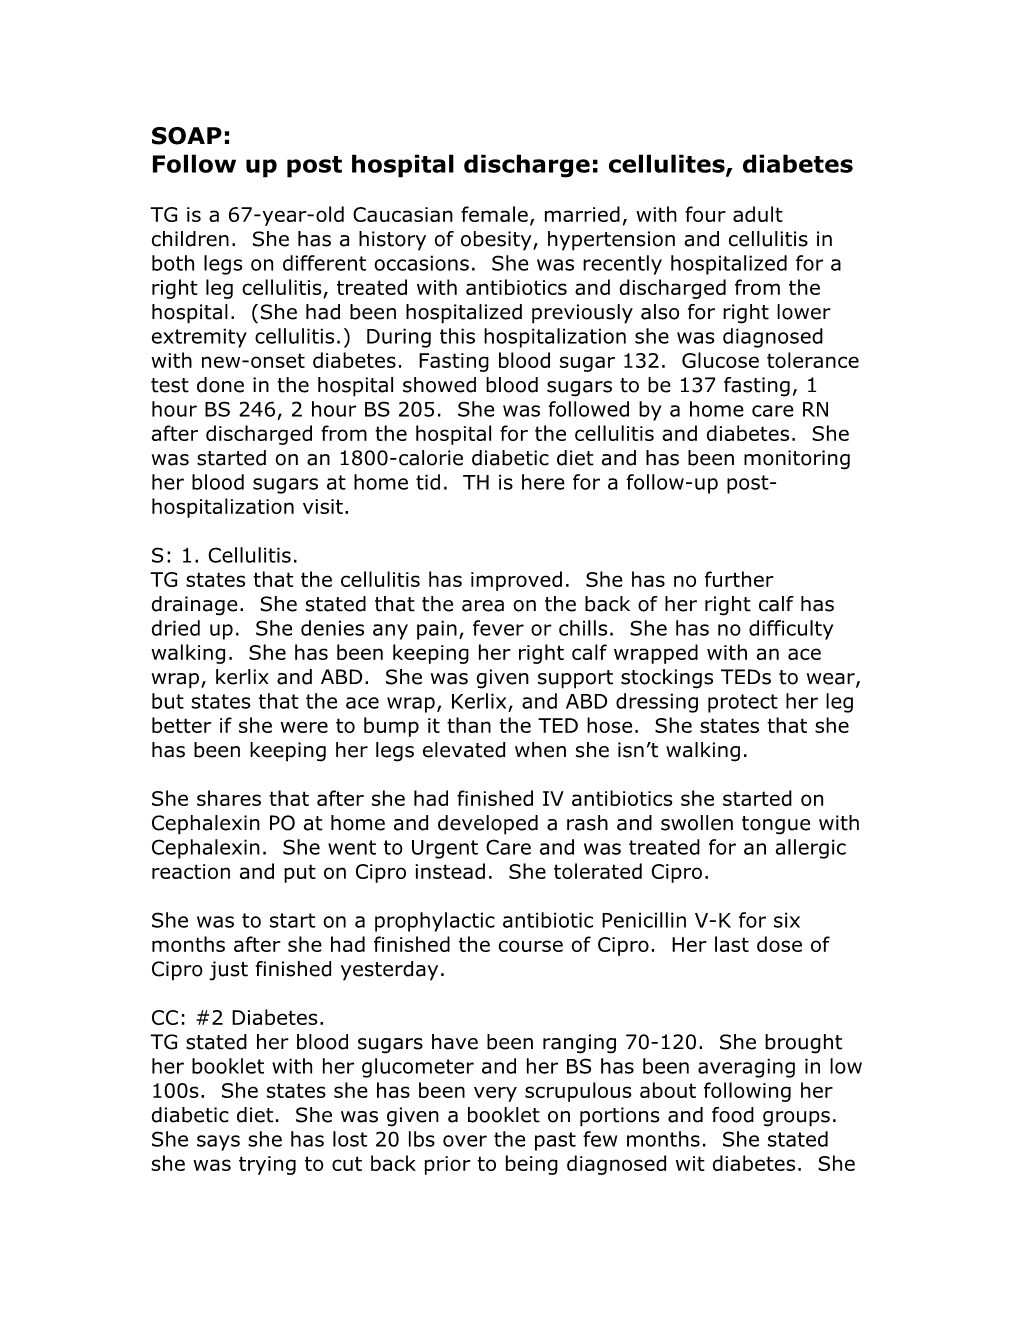 Follow up Post Hospital Discharge: Cellulites, Diabetes